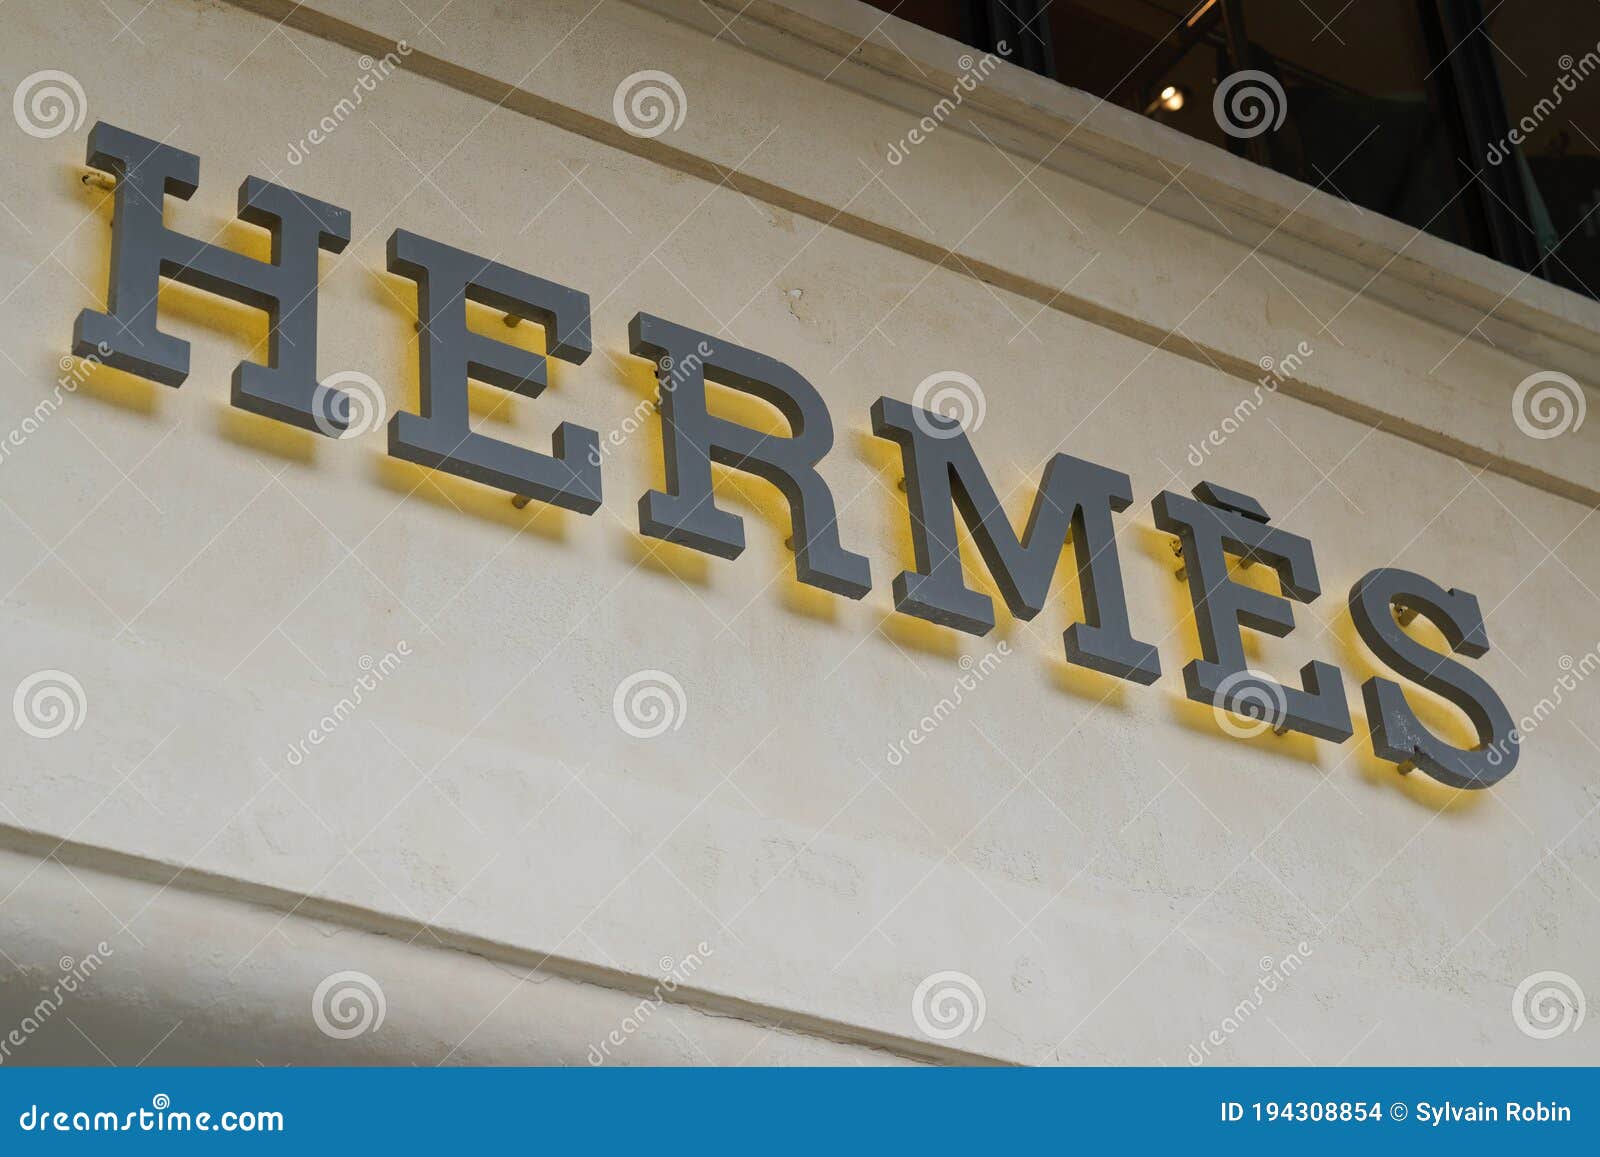 hermès luxury clothing